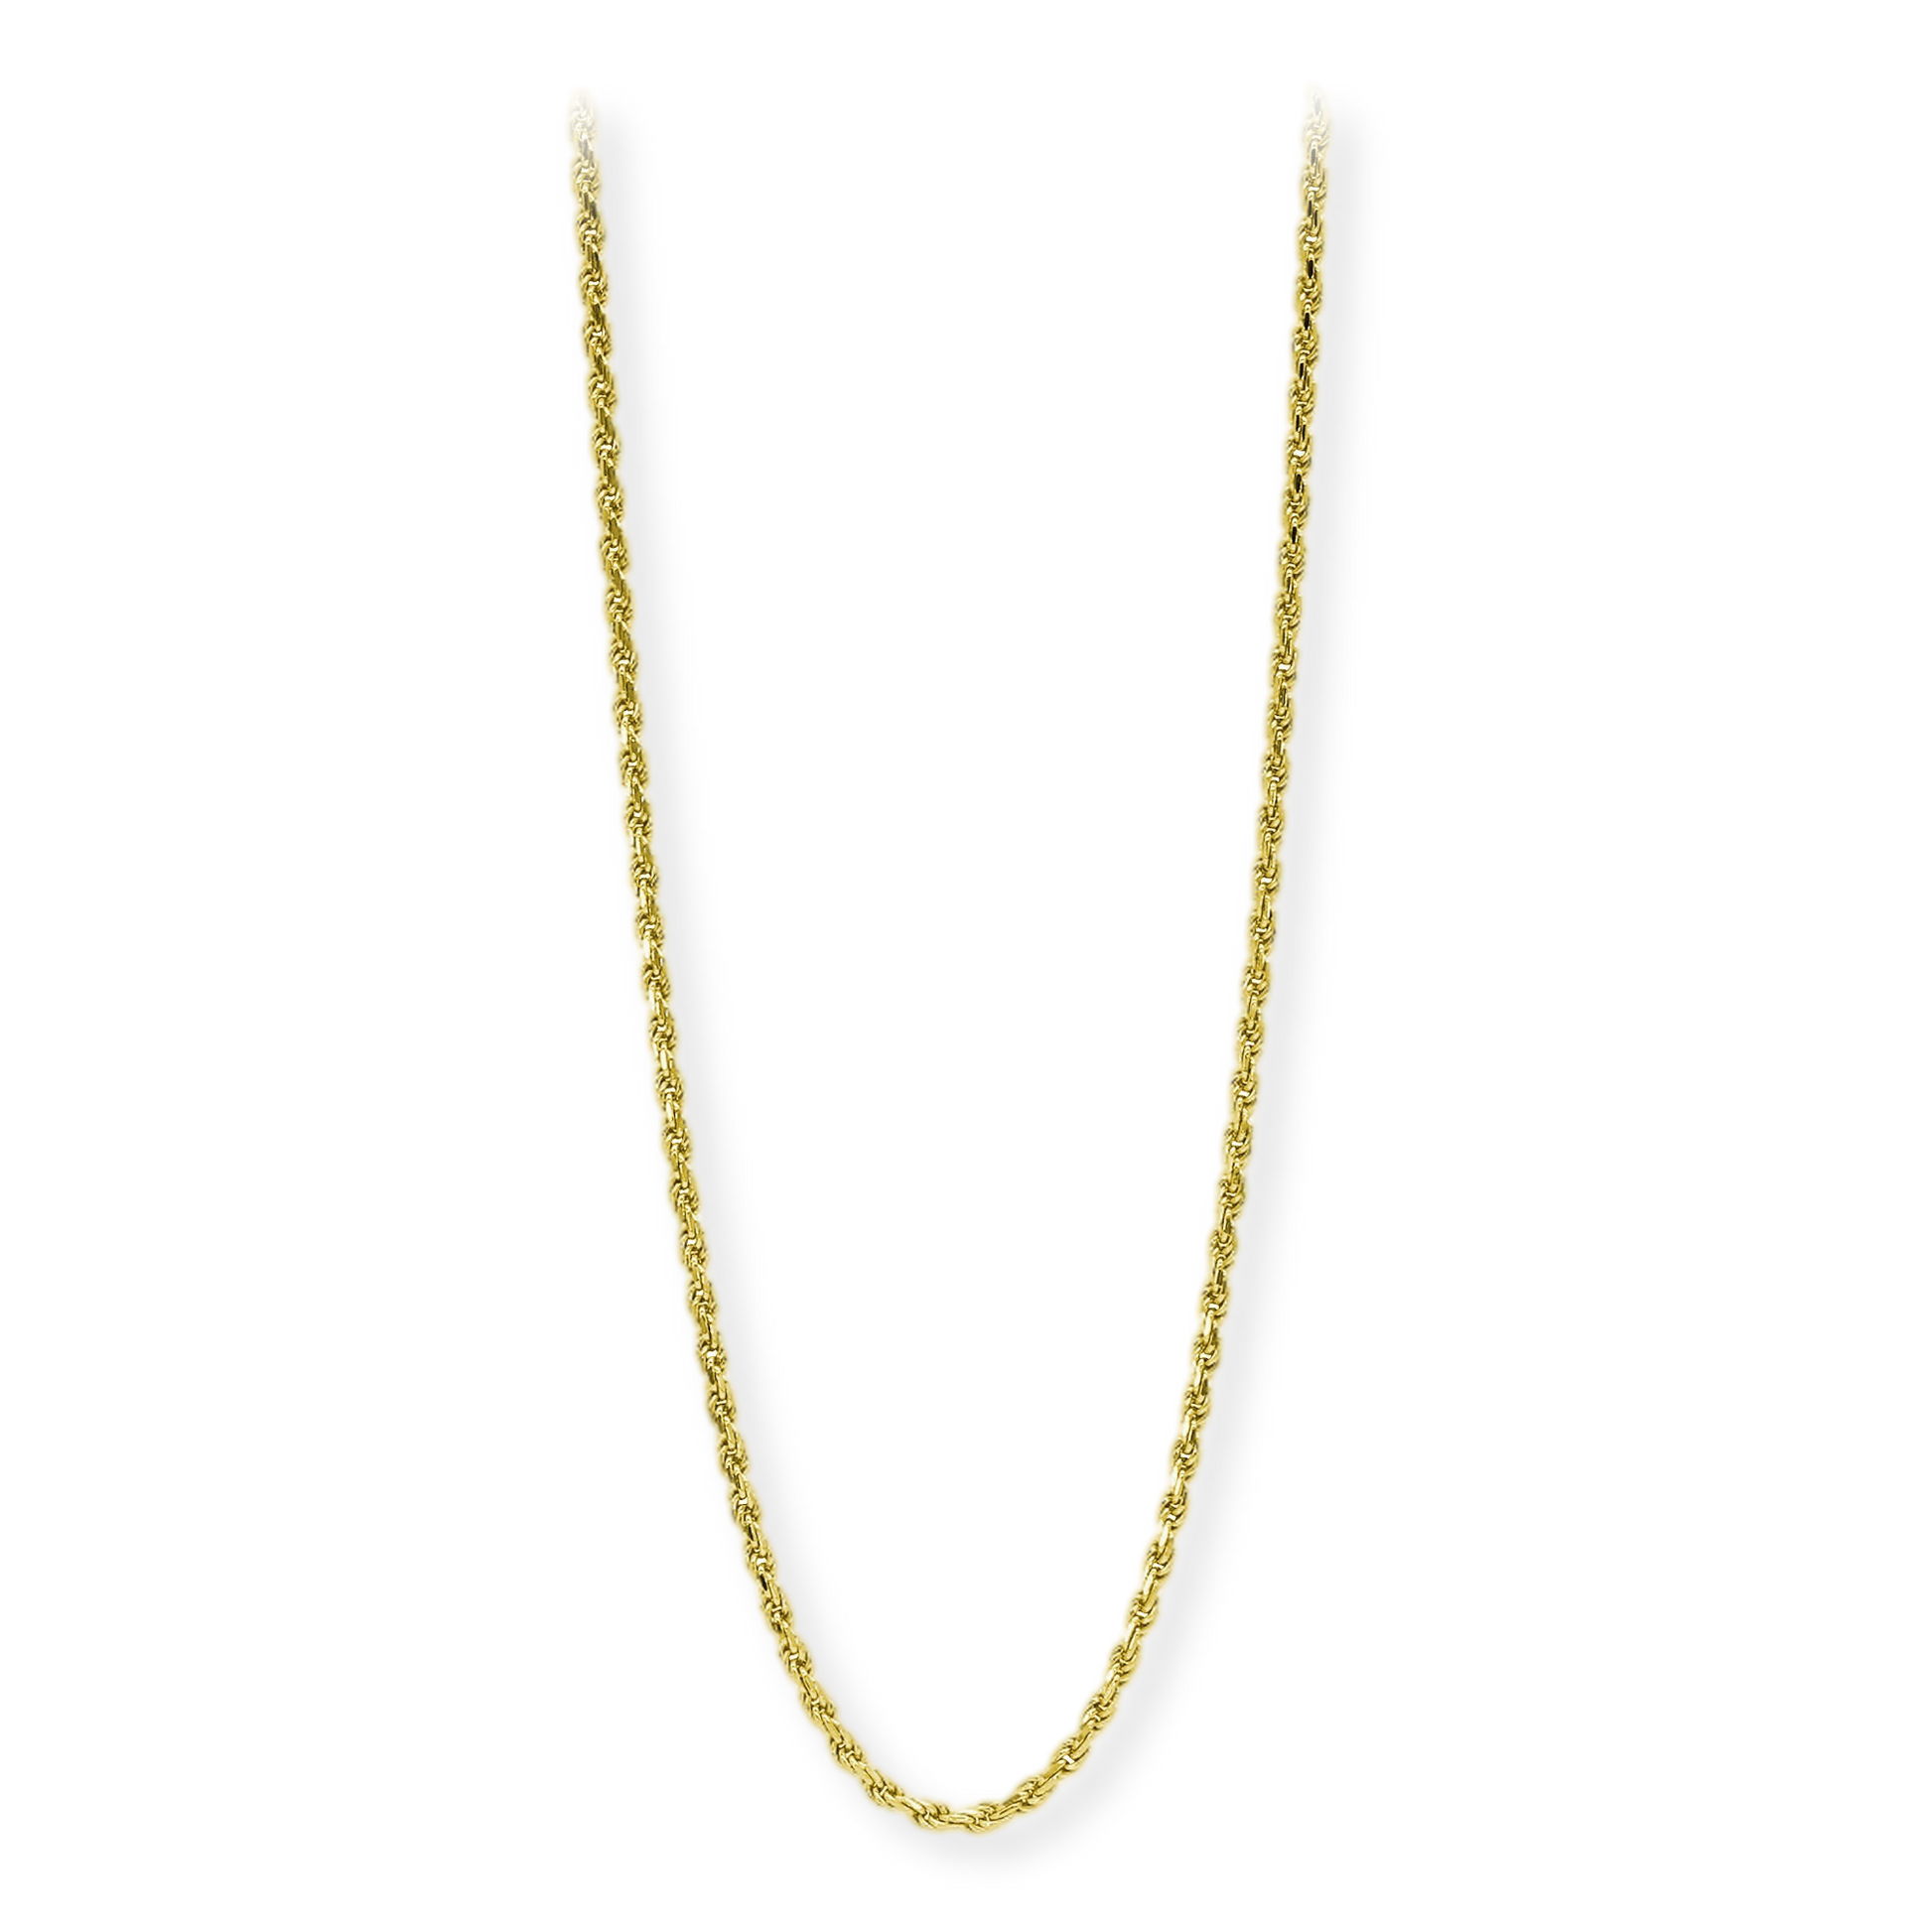 Stellari Gold 18 Karat over Sterling Silver 3mm Diamond Cut Rope Chain